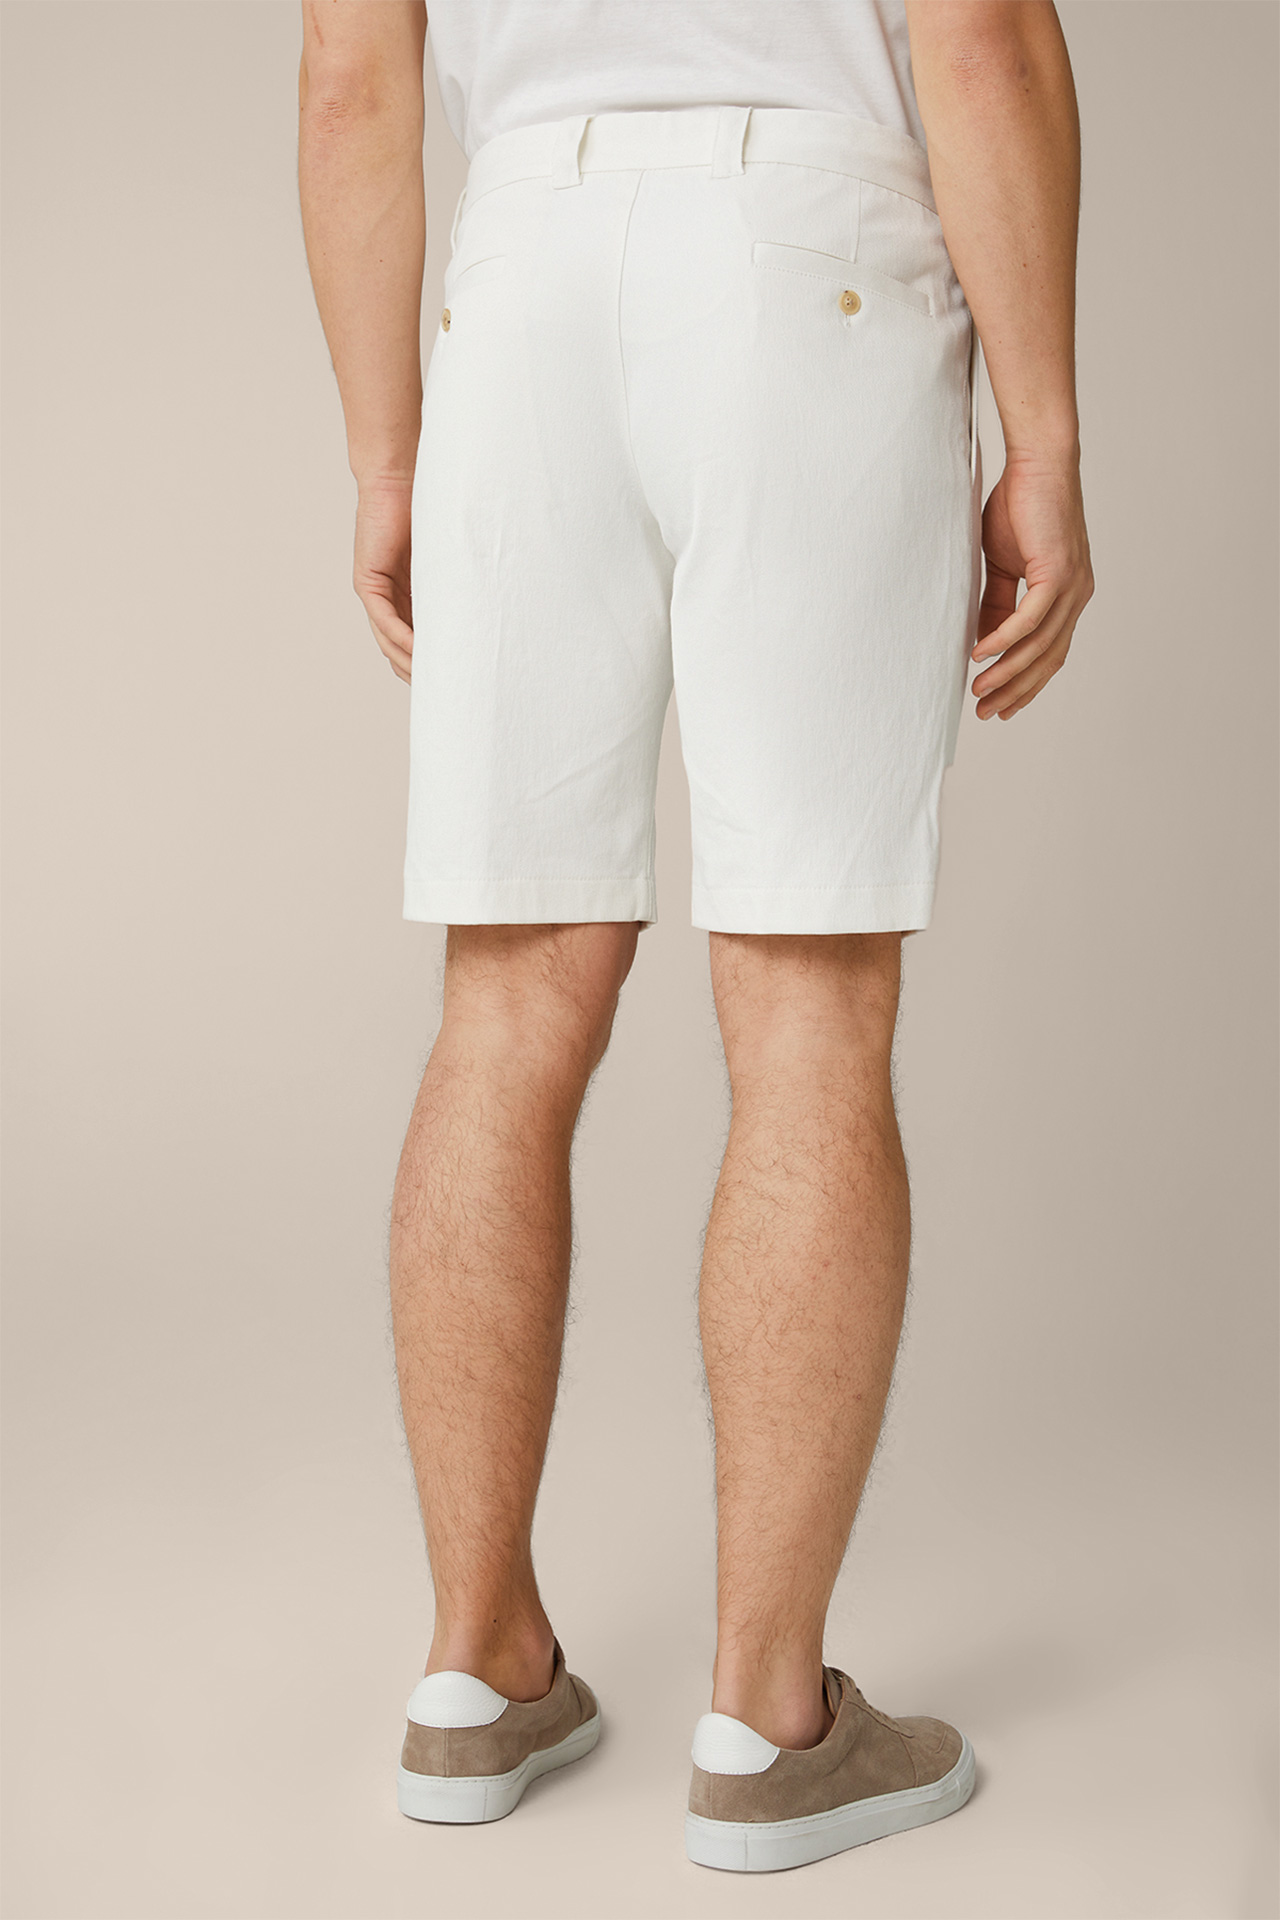 Schio Cotton Stretch Shorts in White